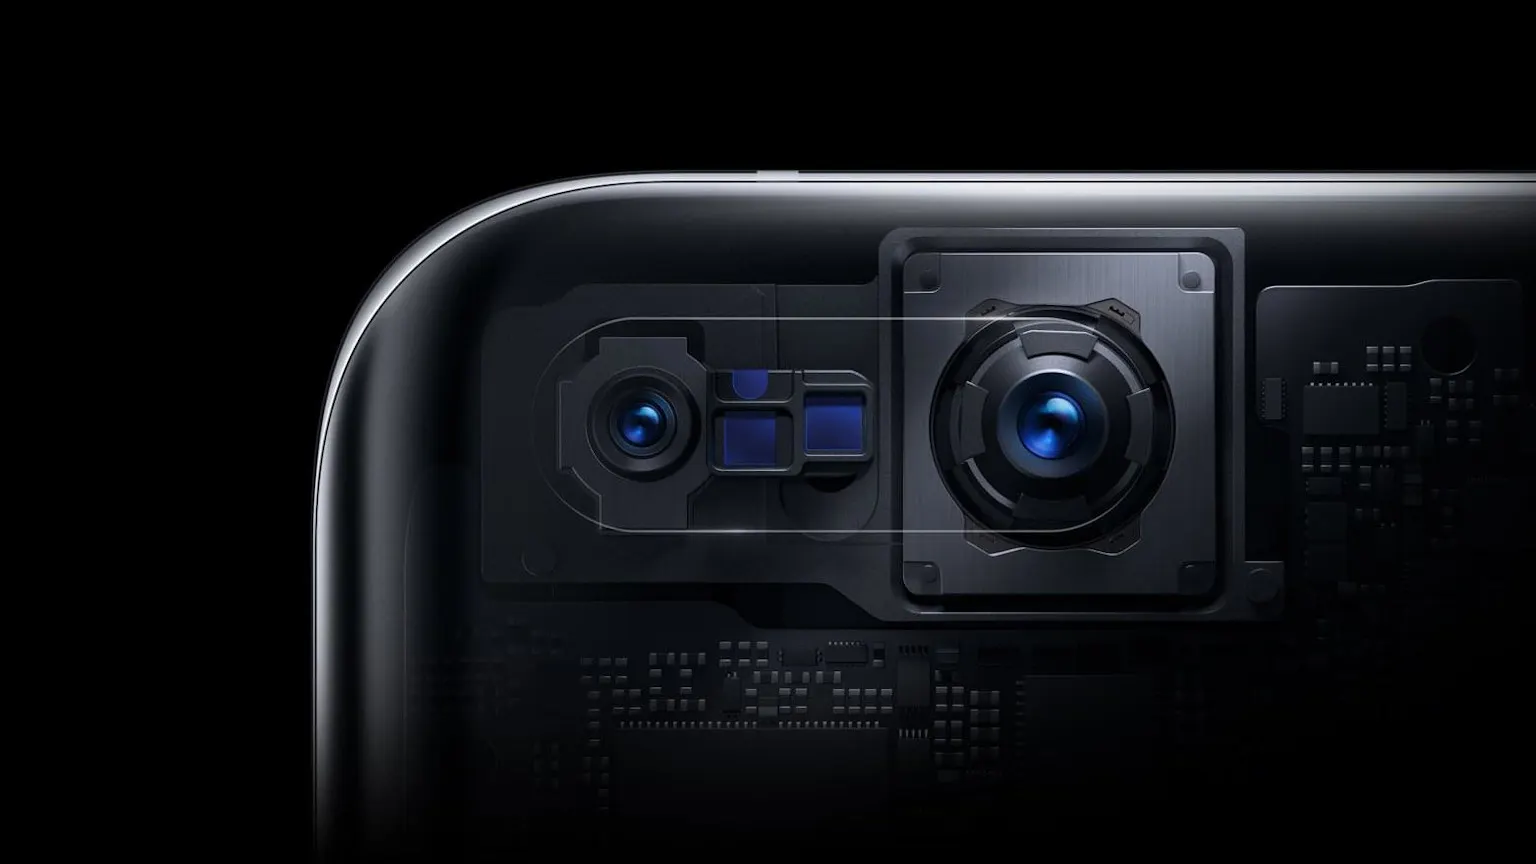 Huawei camera lenses